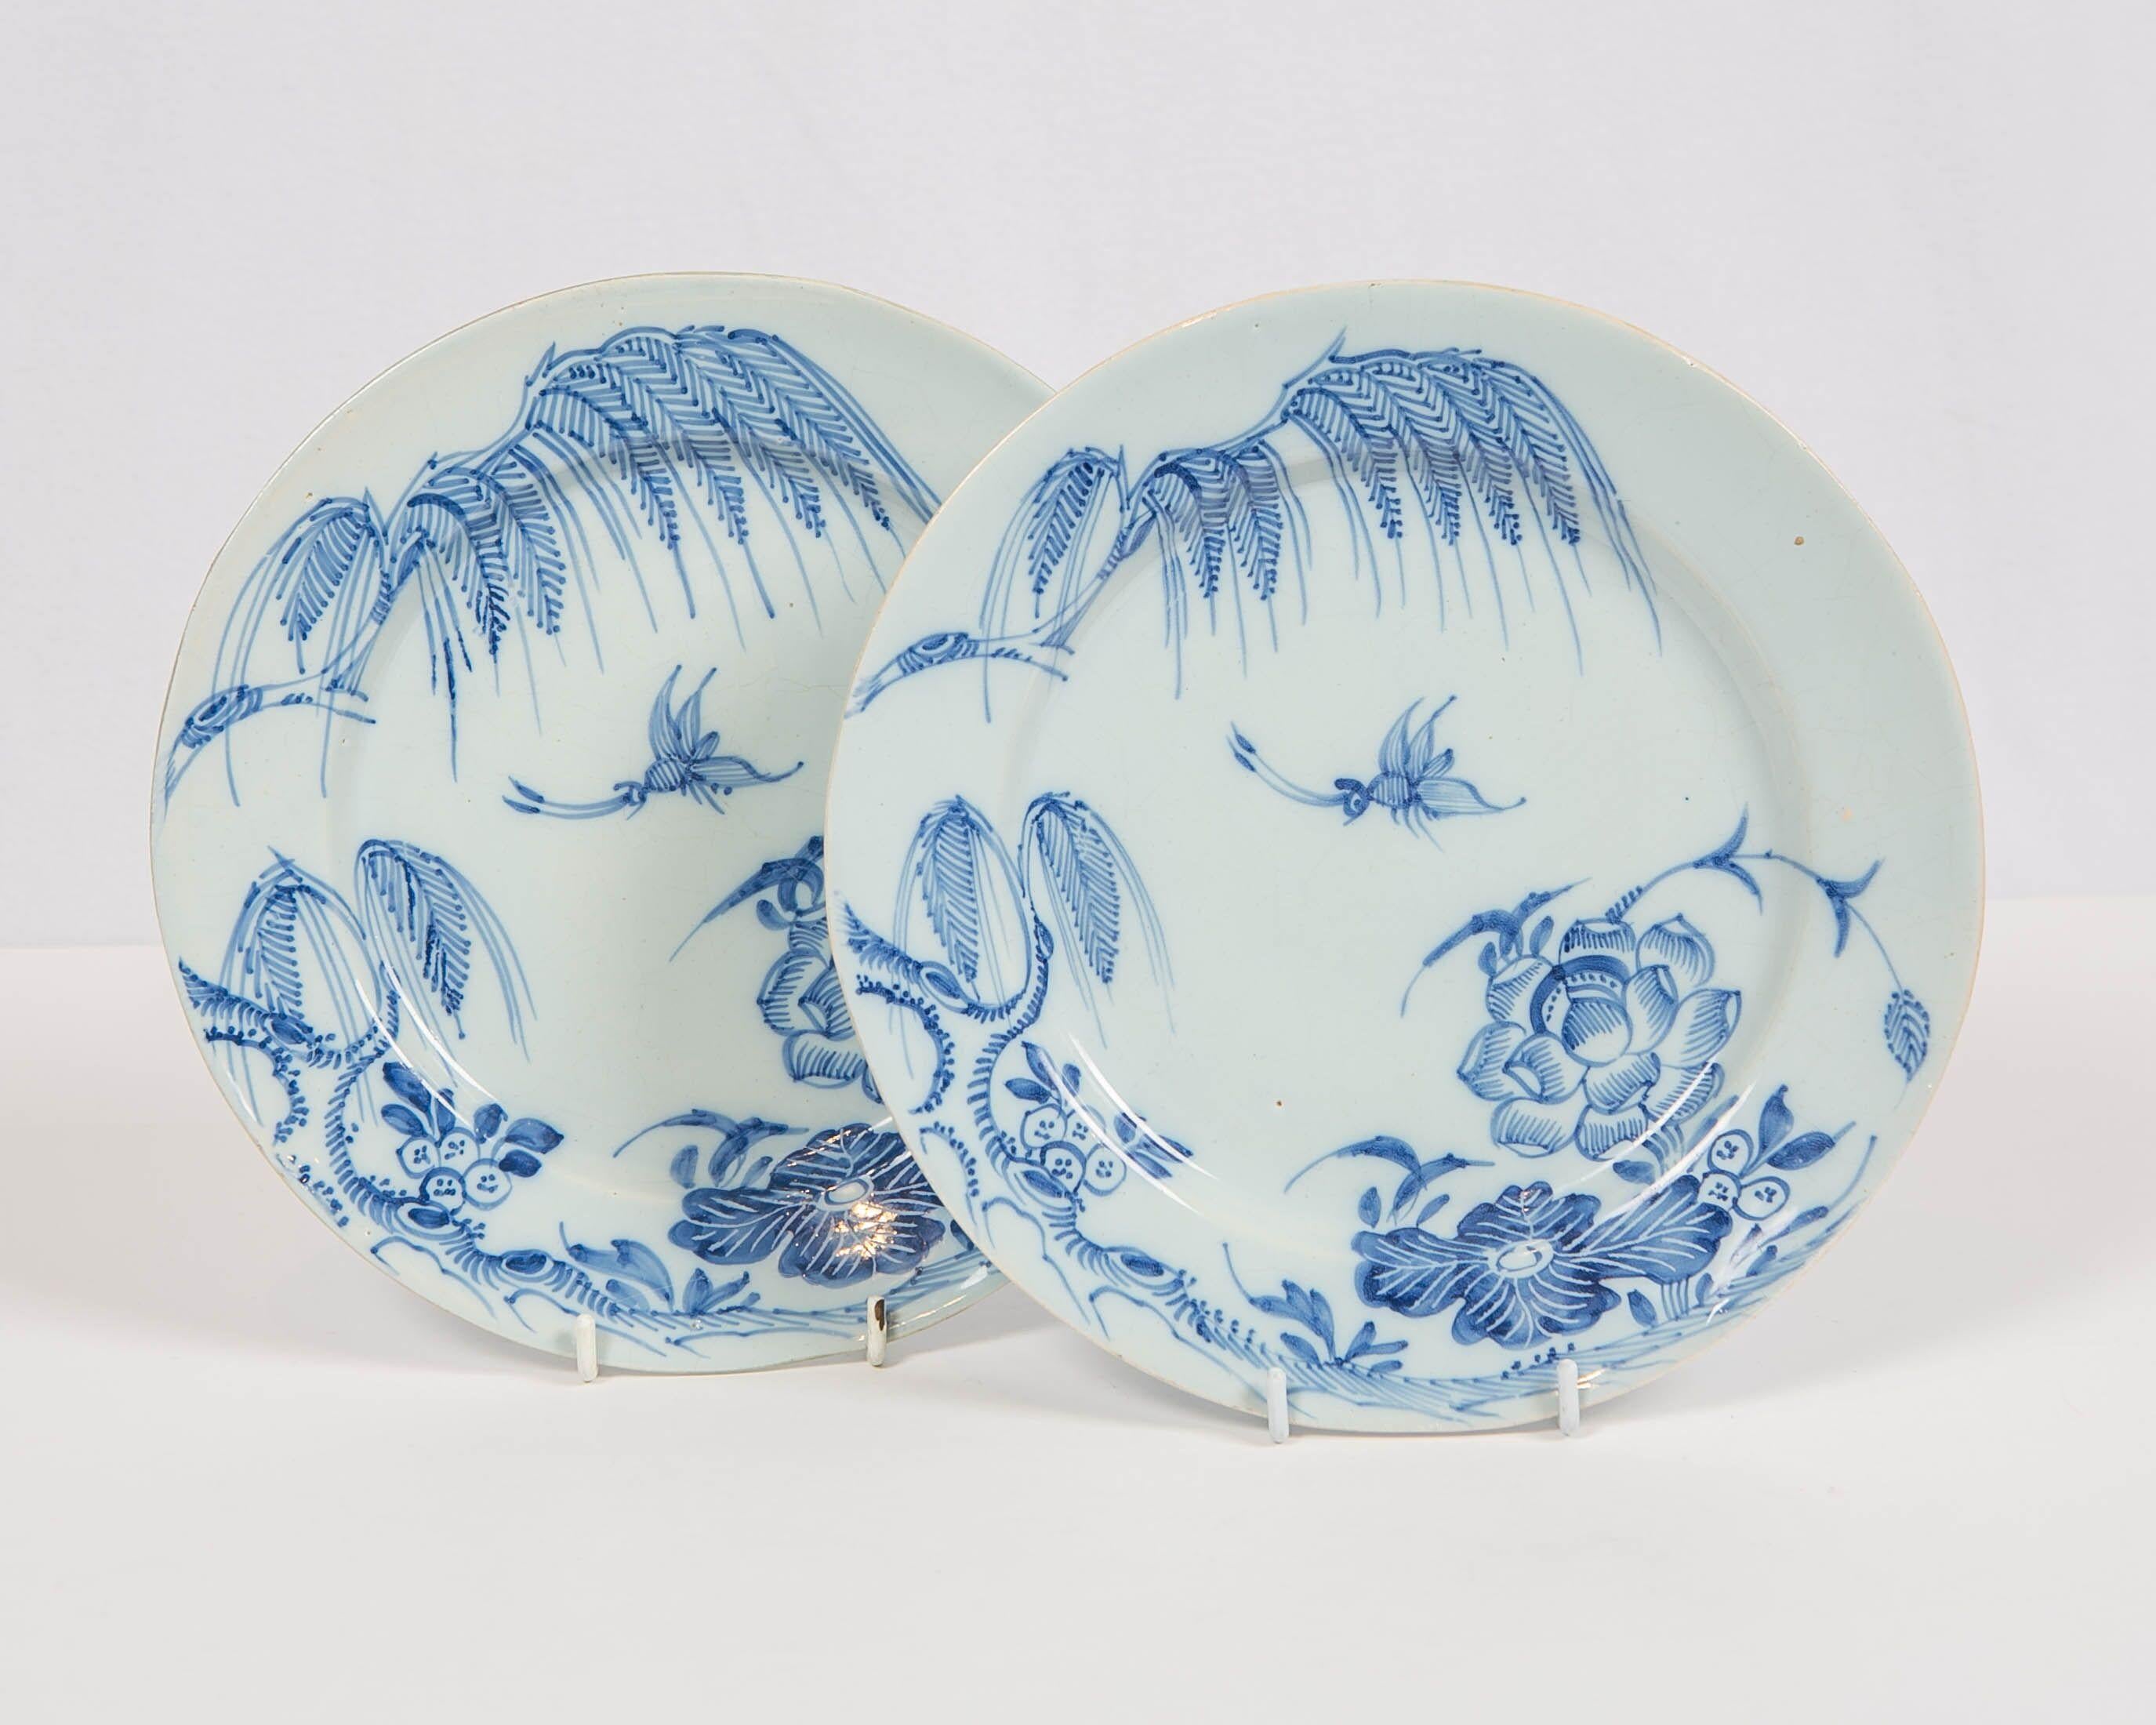  Pair Blue and White Delft Plates 18th Century, Made circa 1750 (Handbemalt)